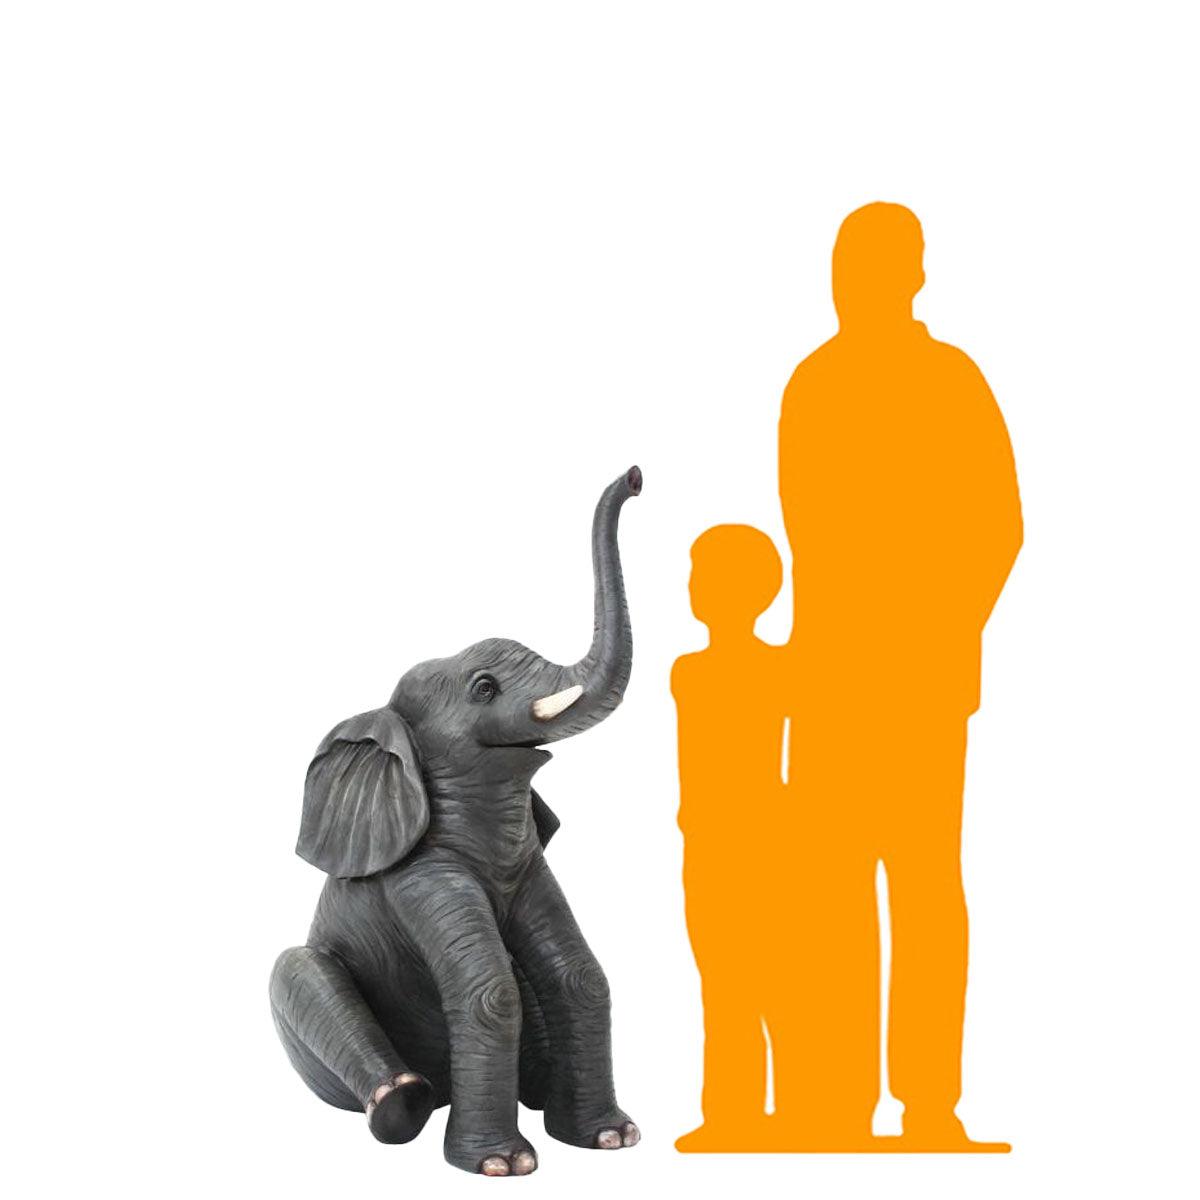 Sitting Elephant Trunk Up Statue - LM Treasures Prop Rentals 